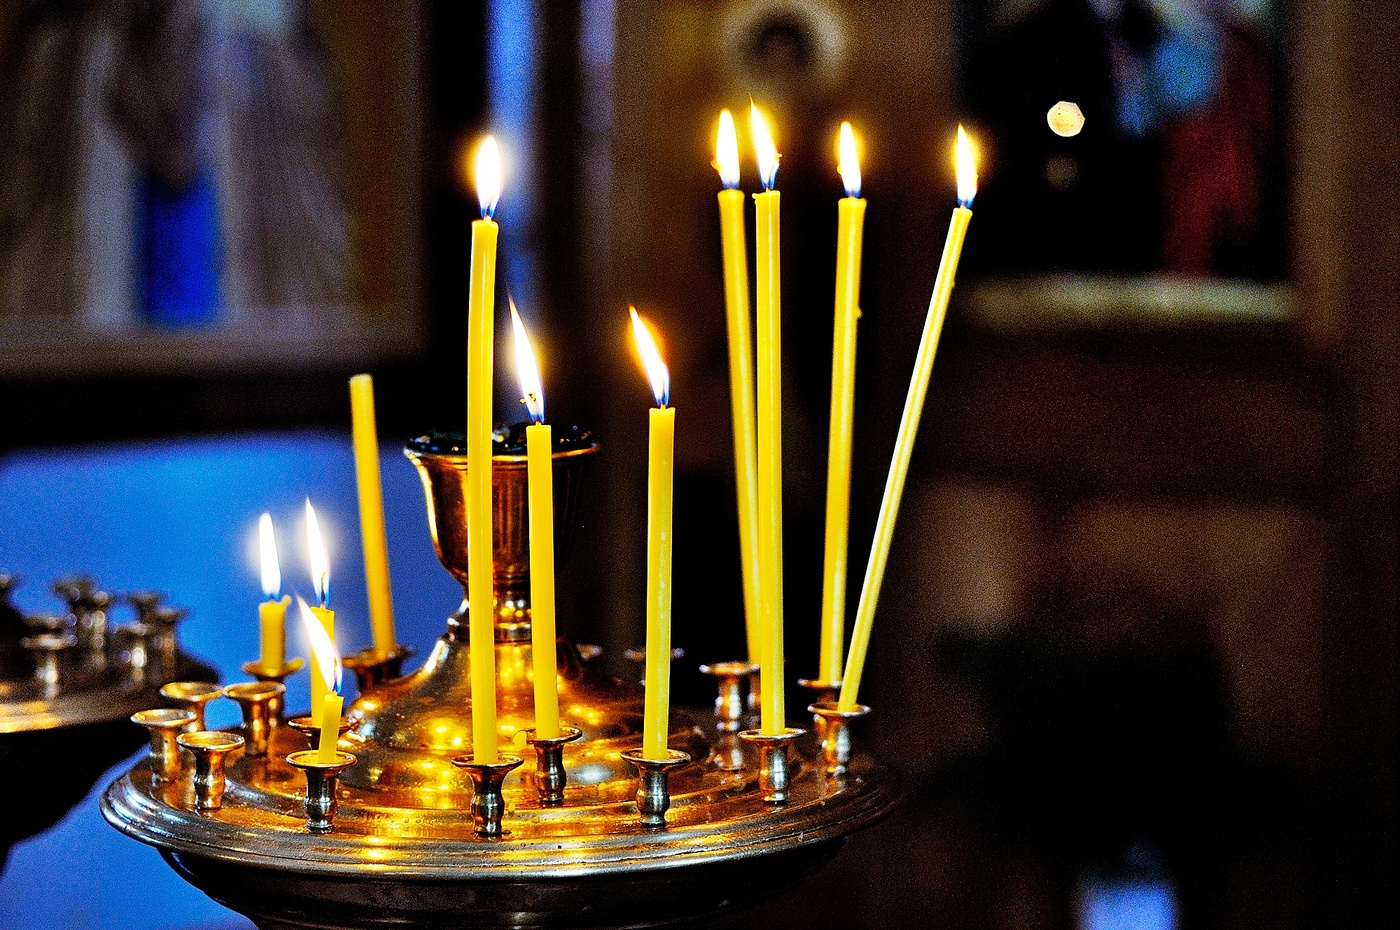 В церкви горят свечи. Церковные свечи. Свечи в храме. Горящие свечи в храме. Свечи в православном храме.